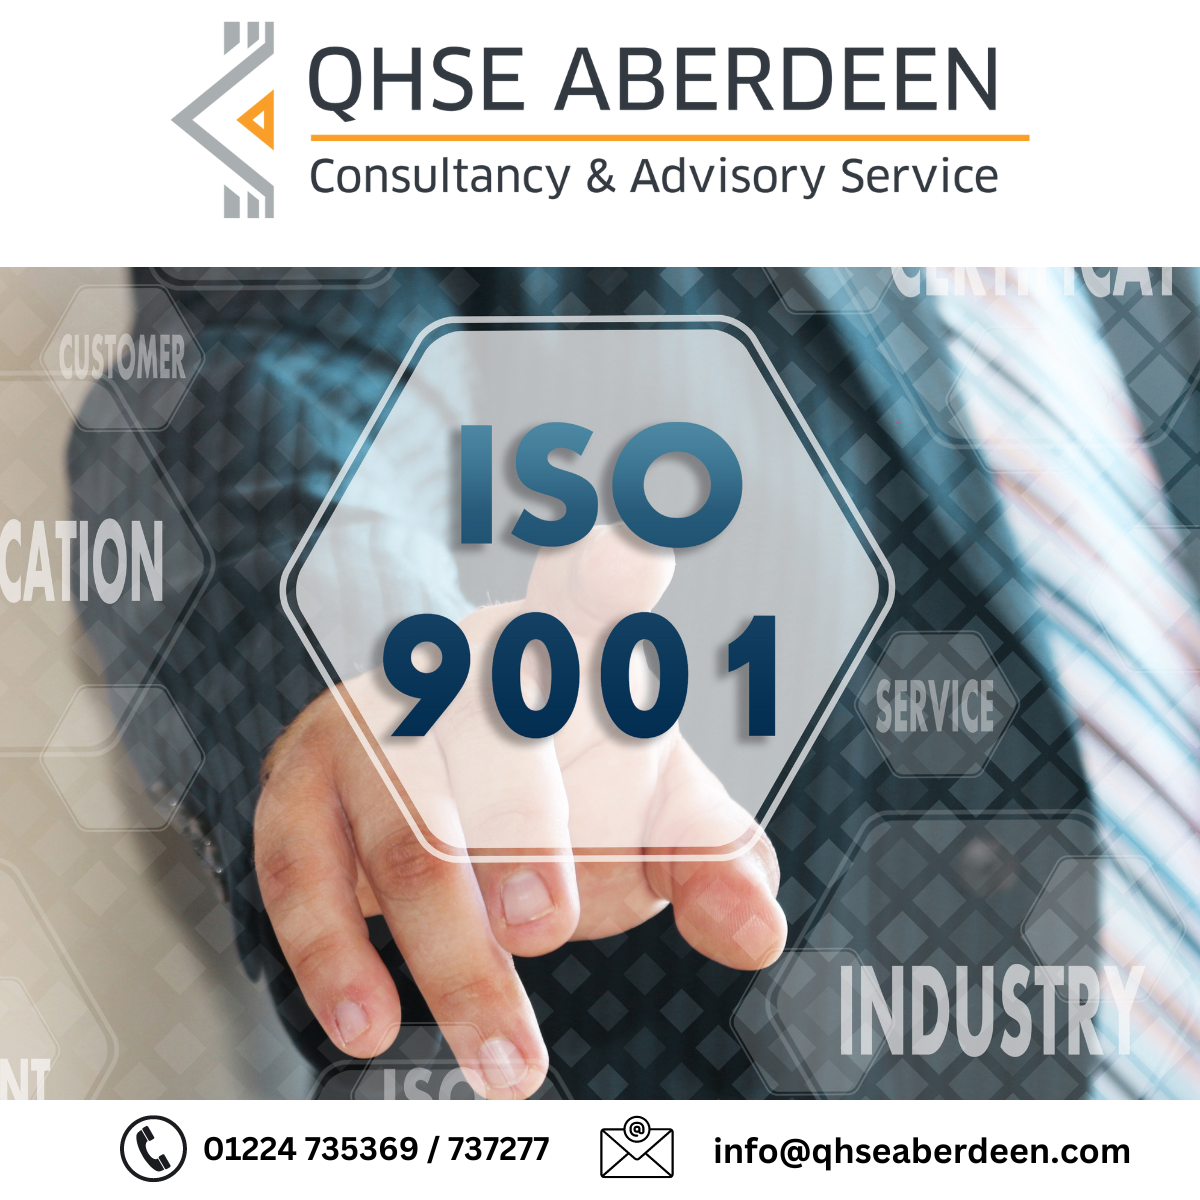 Qhse Aberdeen Limited